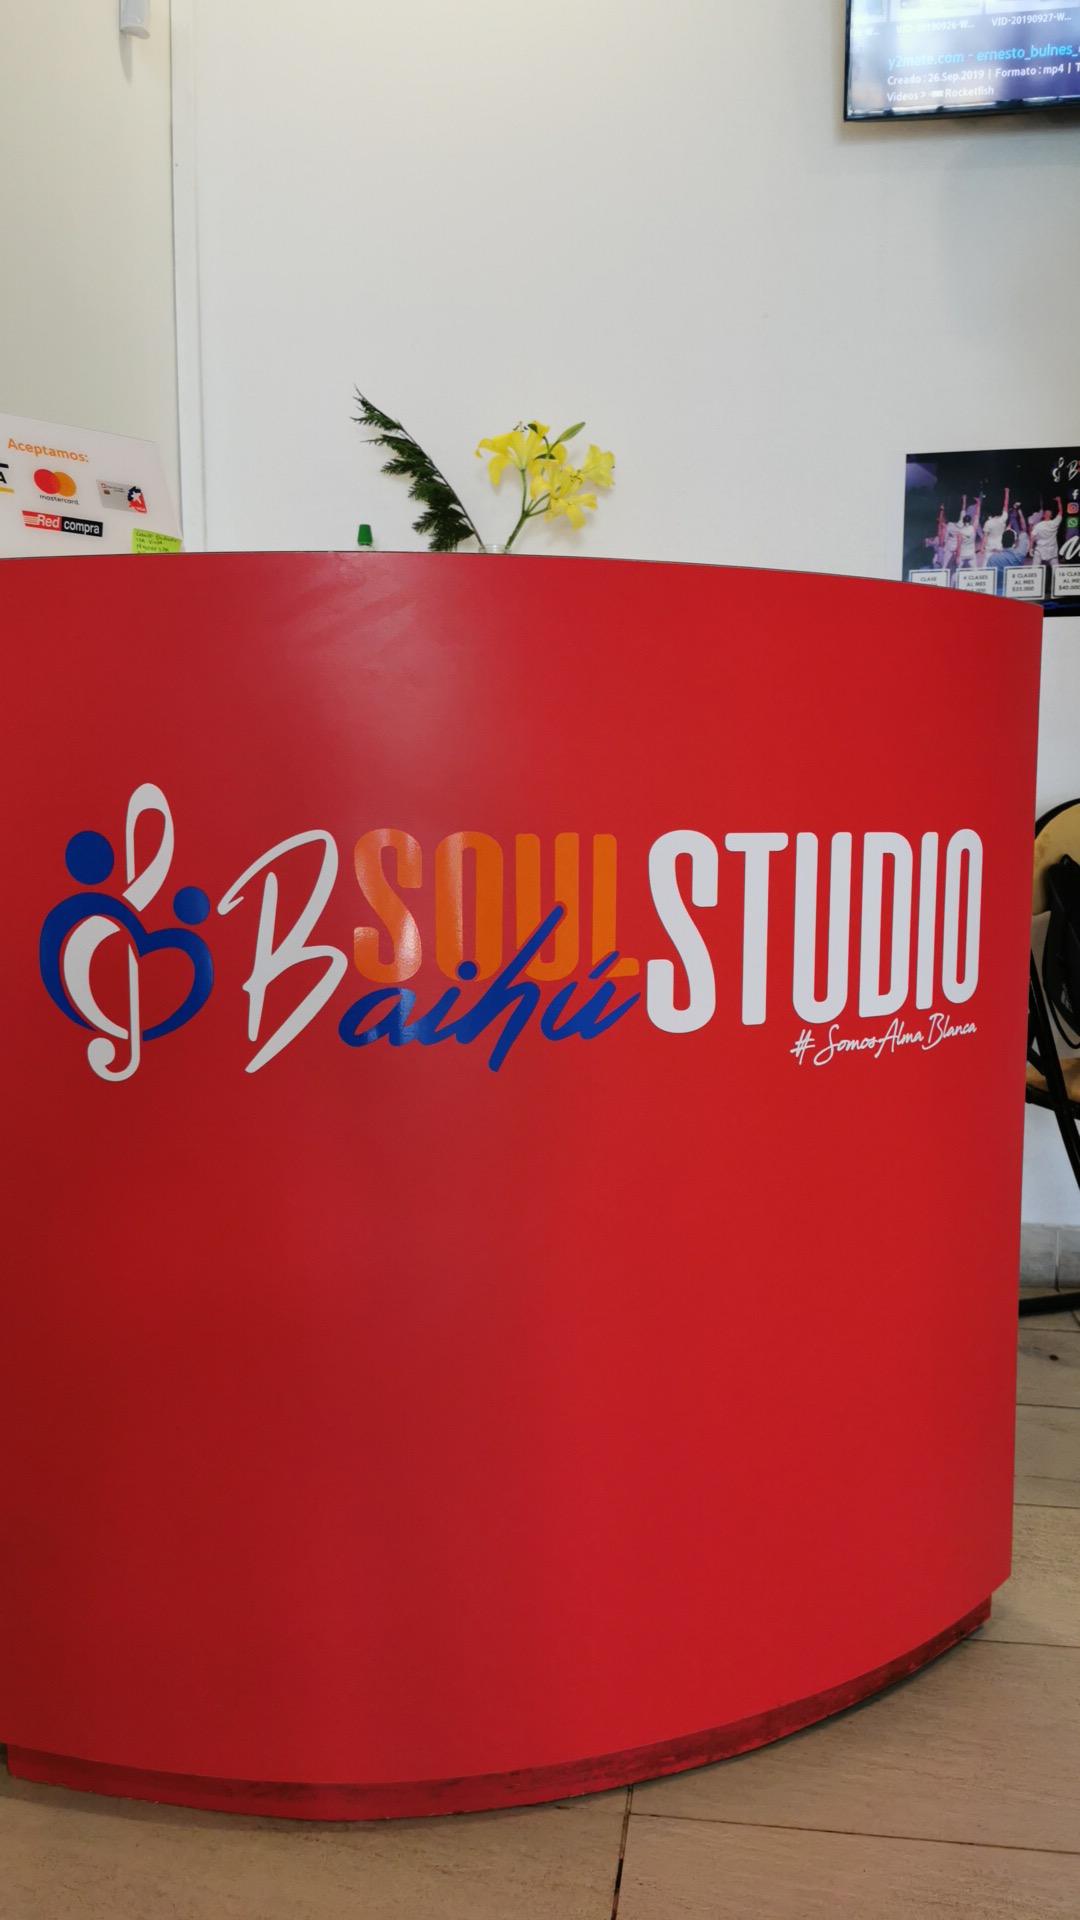 Baisoul Studio